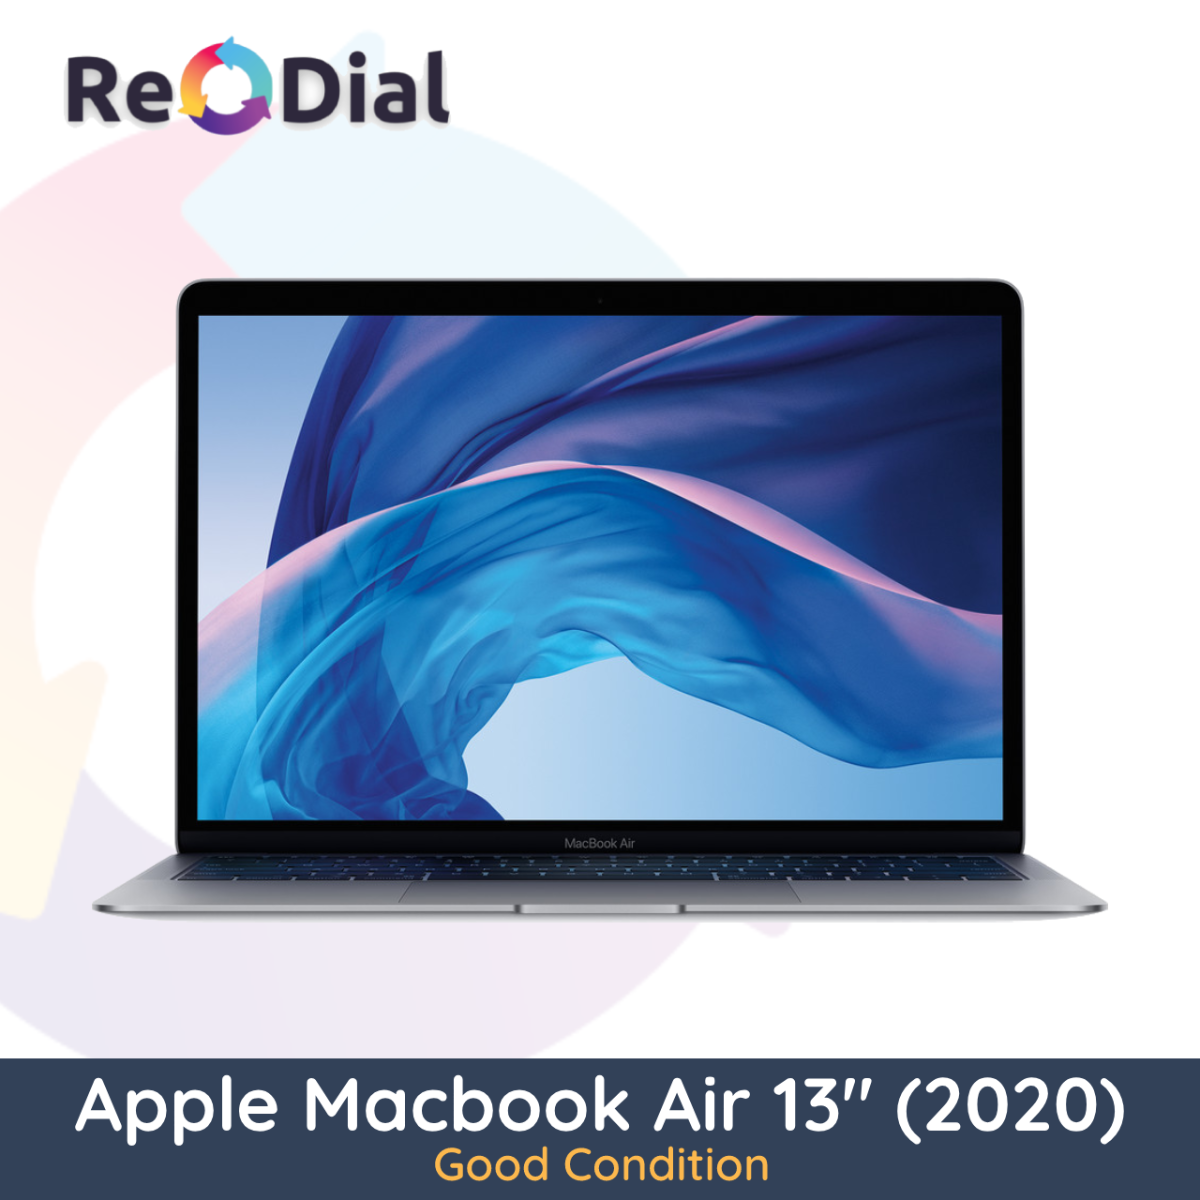 Apple Macbook Air 13" Retina (2020) 1.1GHz dual-core Intel Core i3 - Good Condition